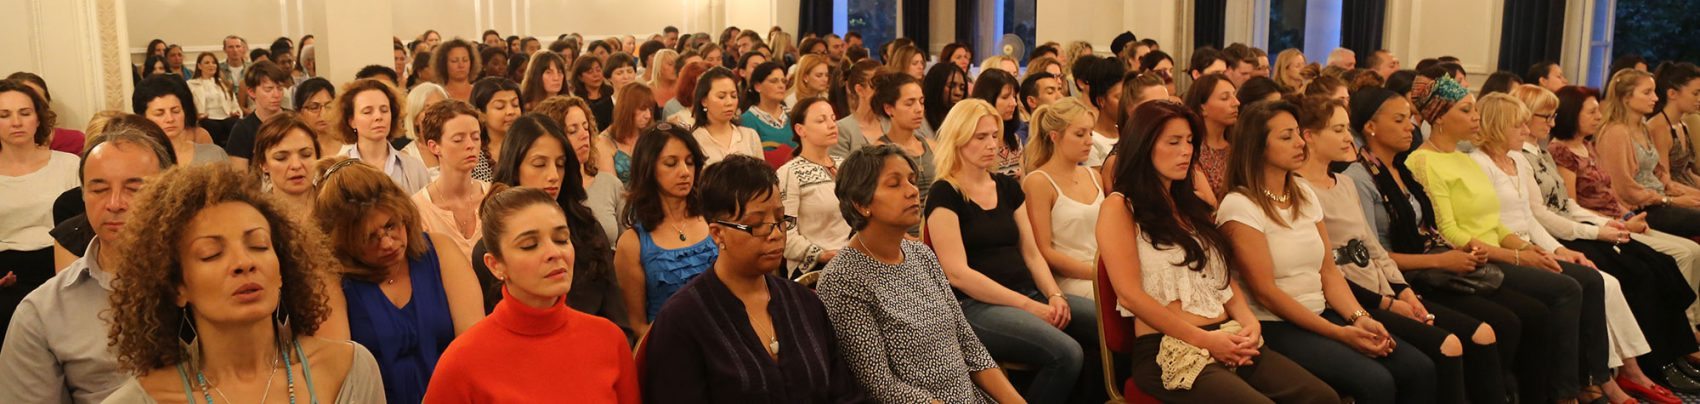 MeditationEvening Crowd - ThetaHealing® Meditation Evening and Sound Bath - Gratitude and Generosity